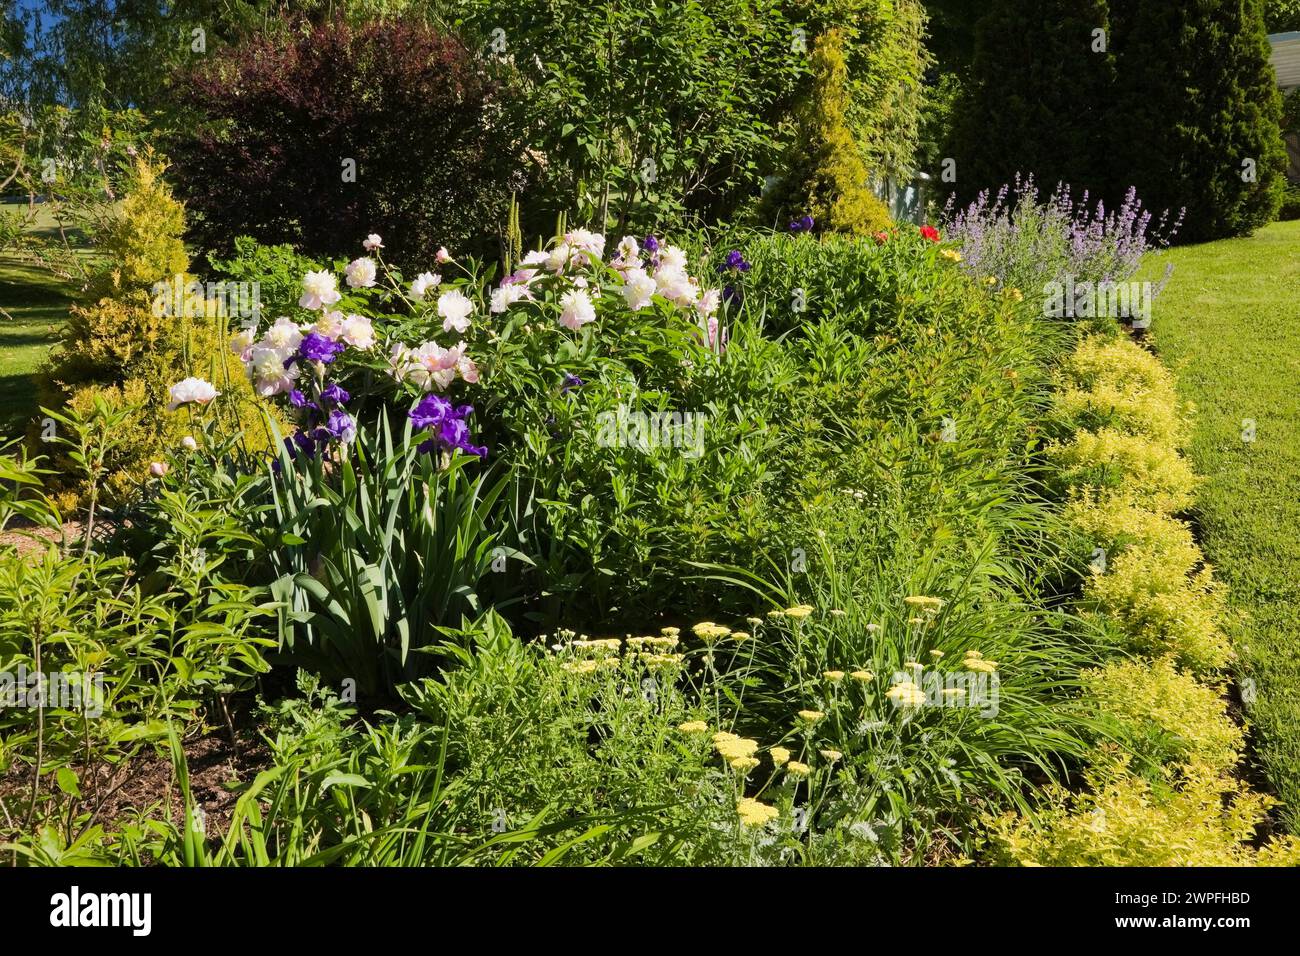 Spiraea japonica 'Gold Flame' - Spirea shrubs, pink Paeonia - Peony, yellow Achillea millefolium - Yarrow flowers in border in backyard garden. Stock Photo